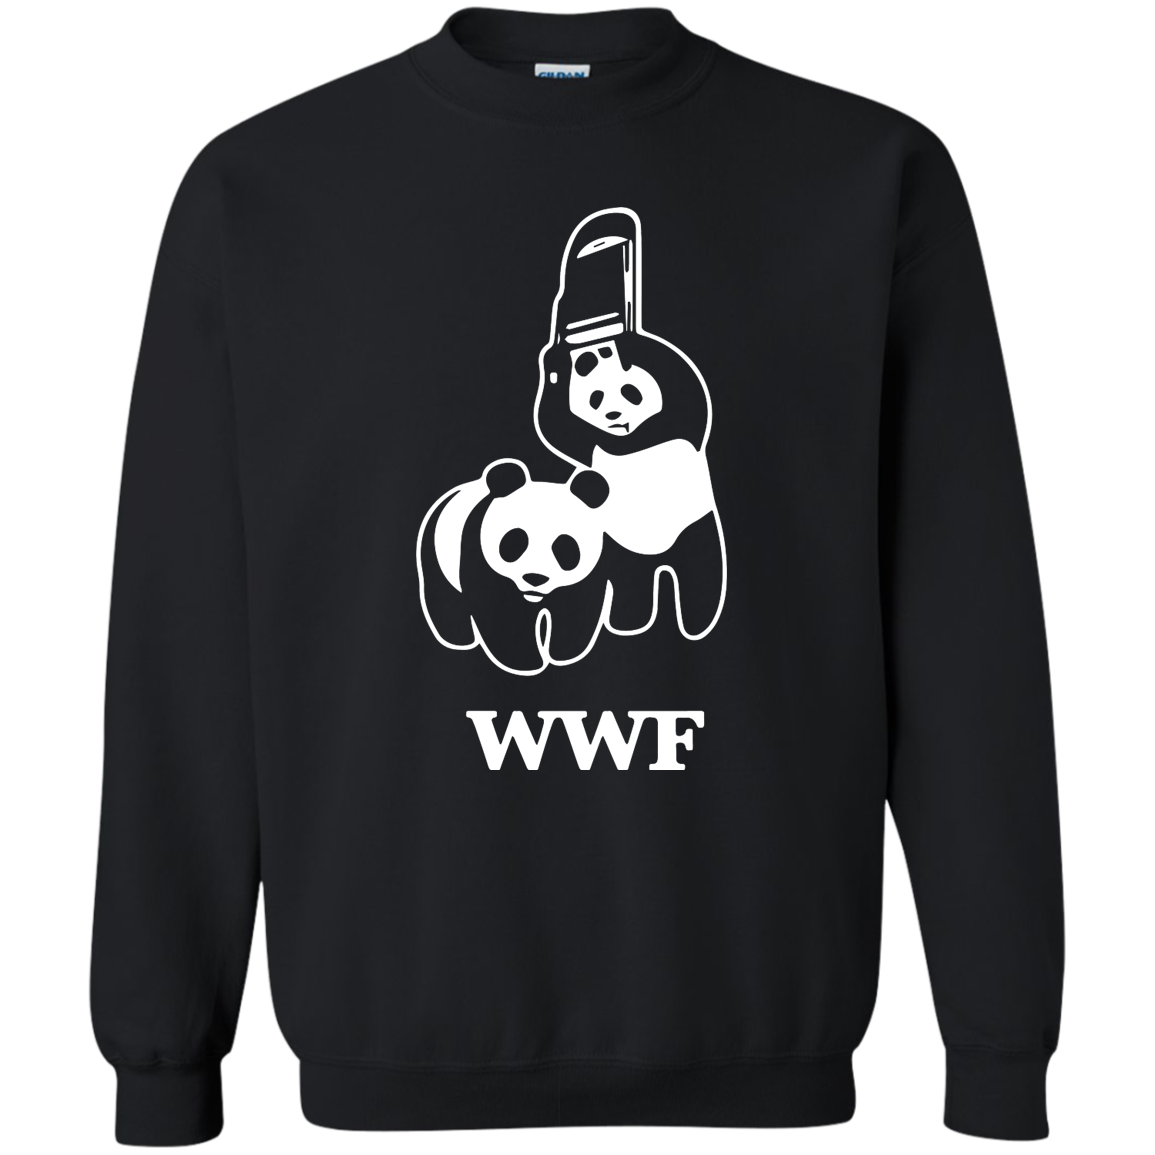 WWF Panda Bear Wrestling Parody shirt -